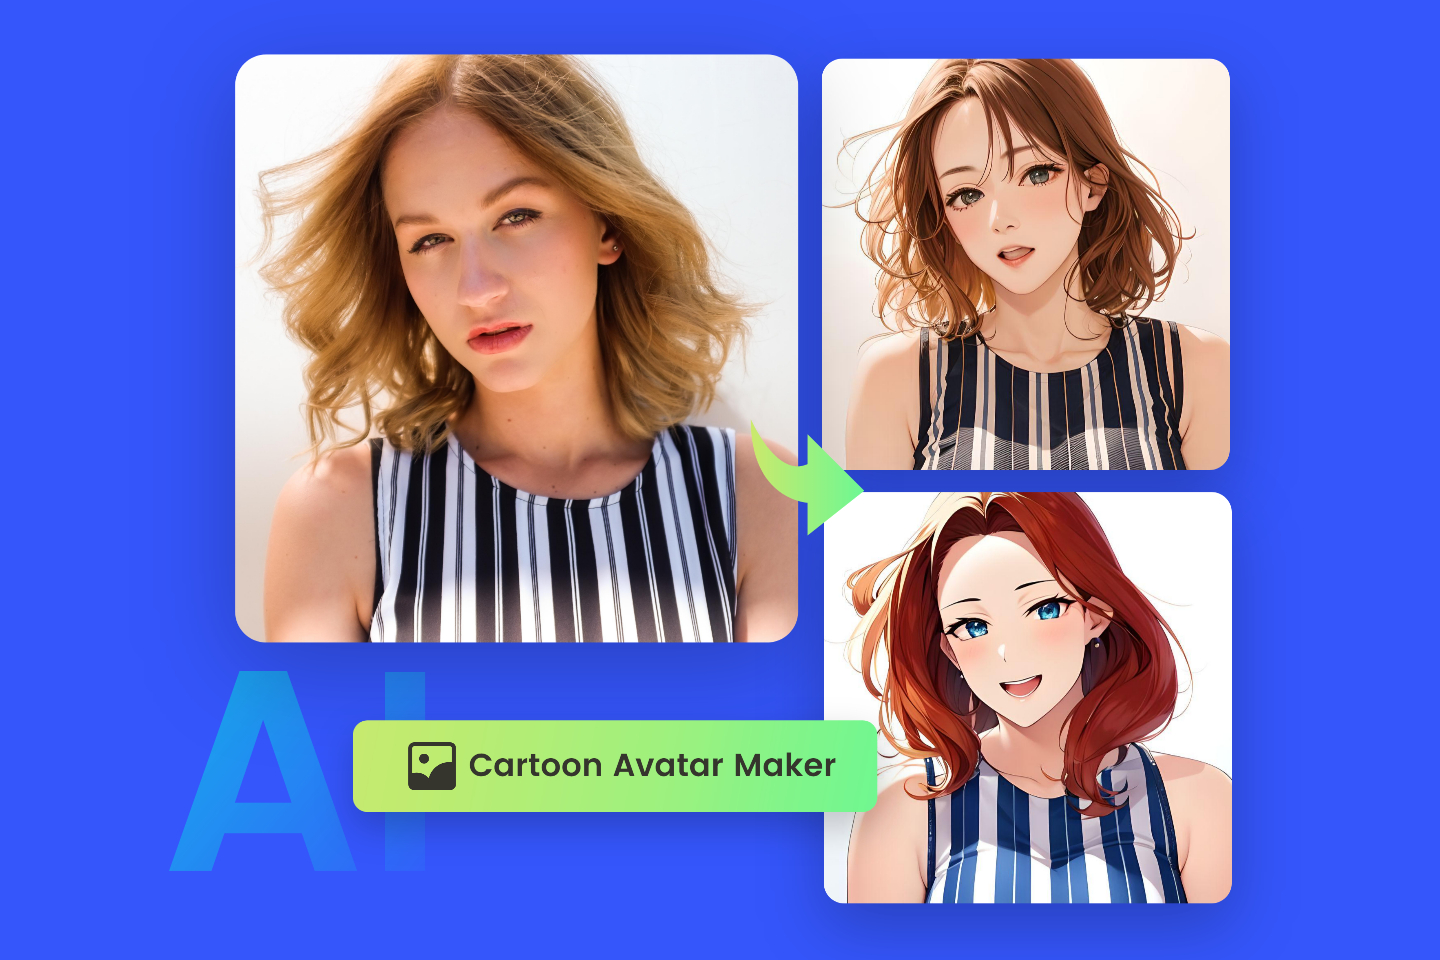 Use fotor cartoon avatar make to make two cartoon avatars from female photos